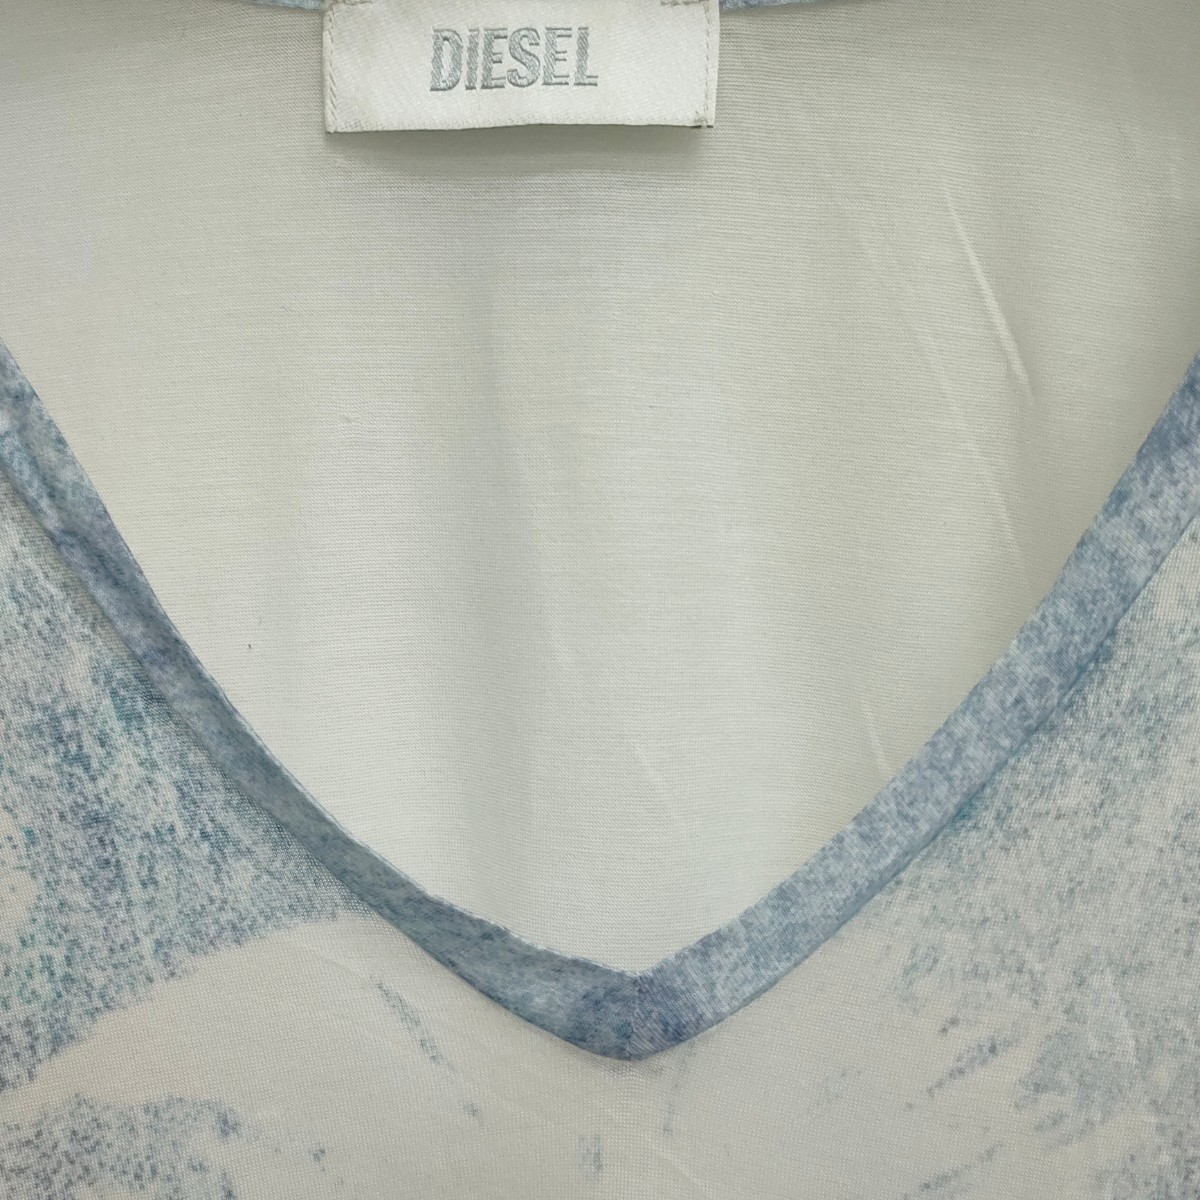 DIESEL / ディーゼル メンズ トップス VネックTシャツ フロントロゴ ブルー系×ホワイト 夏服 メッシュ 細見え Sサイズ相当 I-2162_画像2